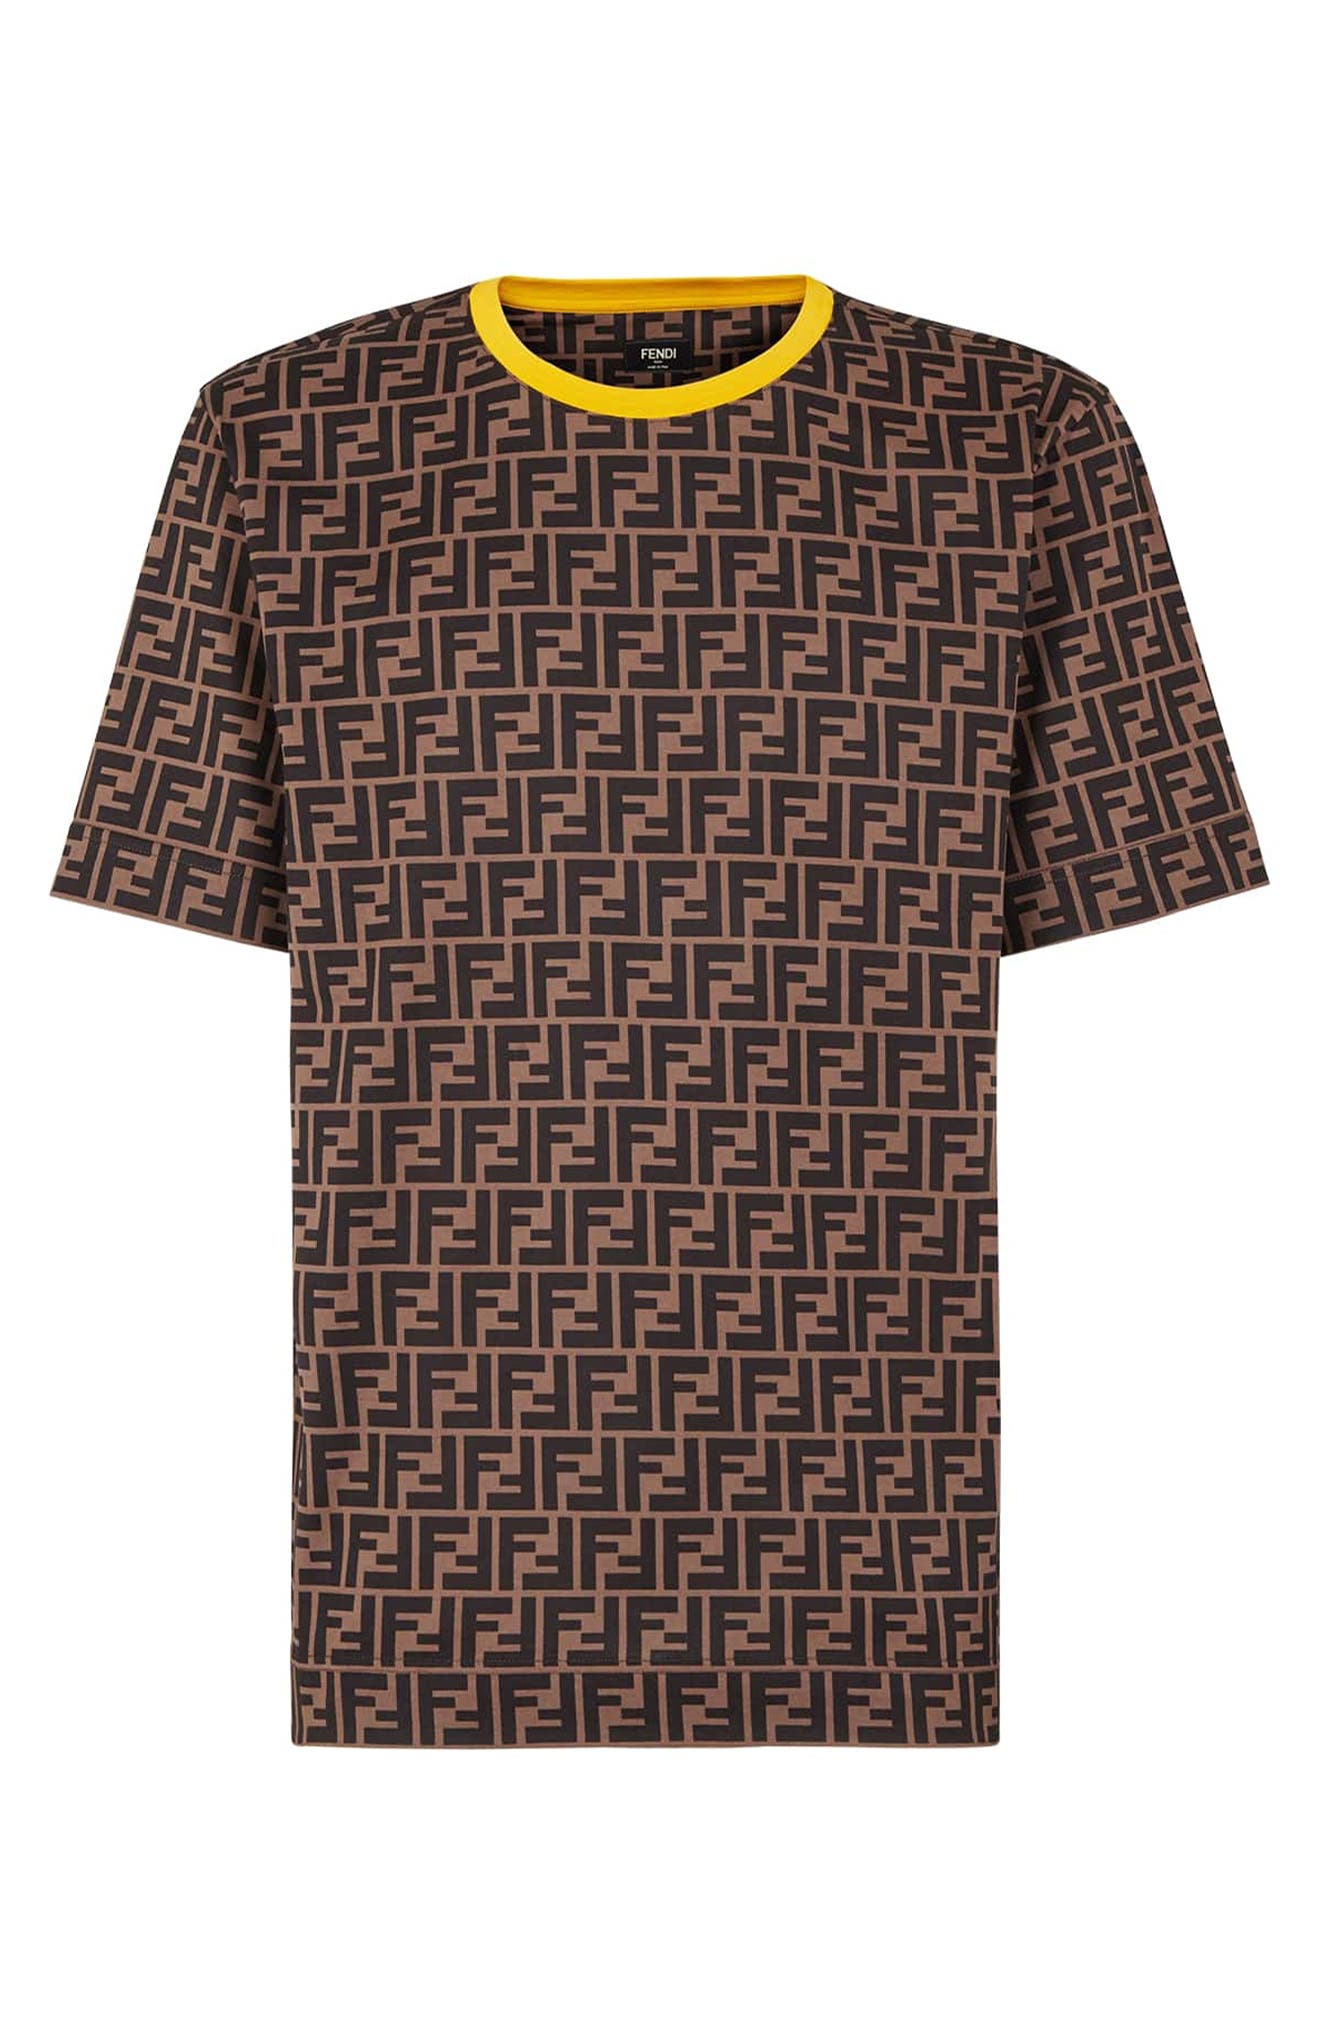 fendi logo print shirt